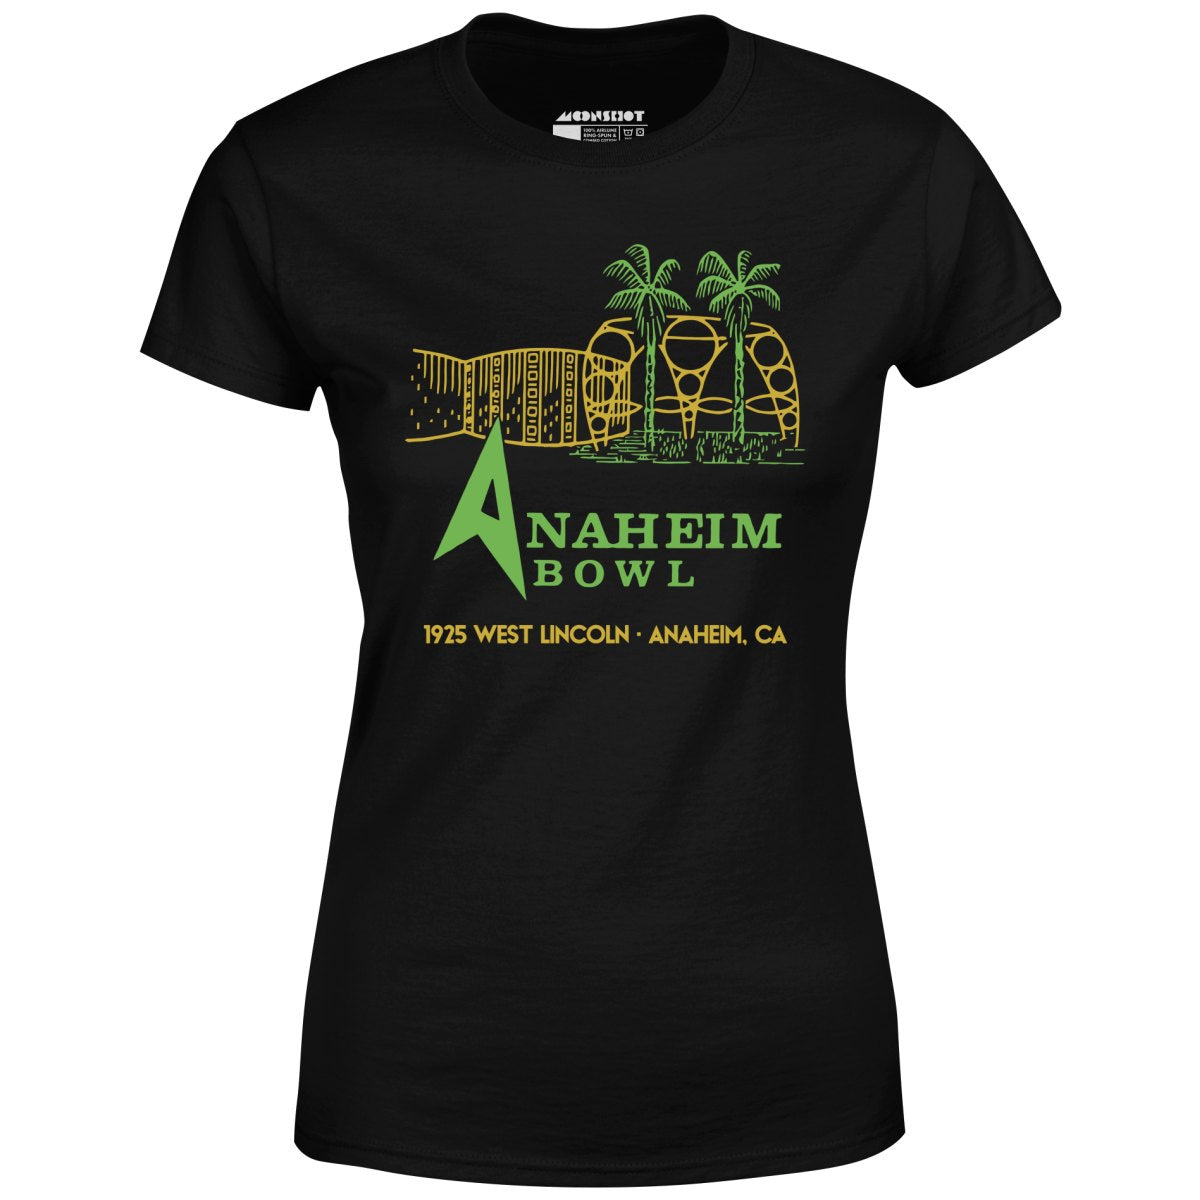 Anaheim Bowl - Anaheim, CA - Vintage Bowling Alley - Women's T-Shirt